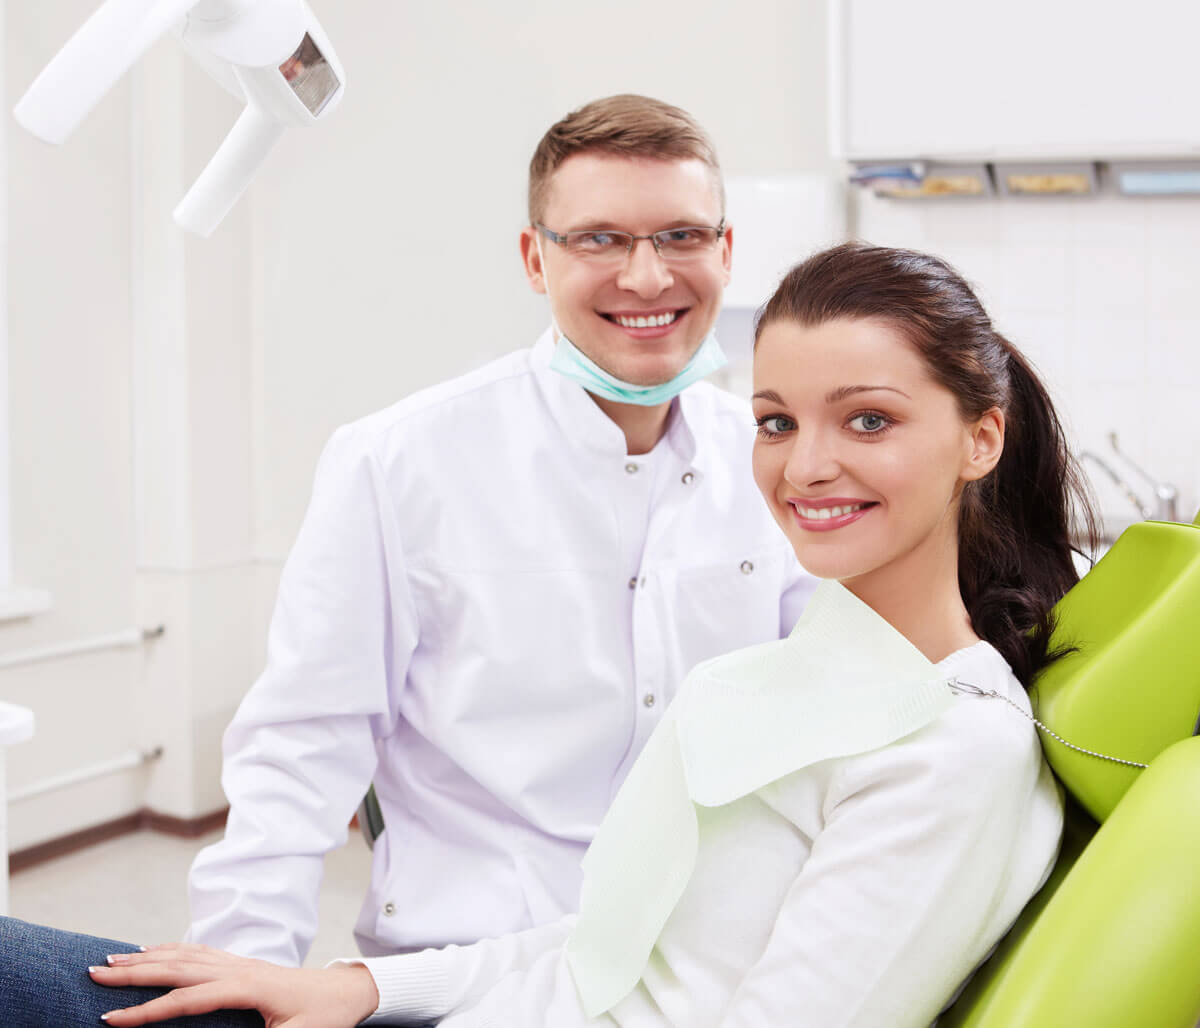 Respected dentist near Normal, IL explains the dental filling procedure